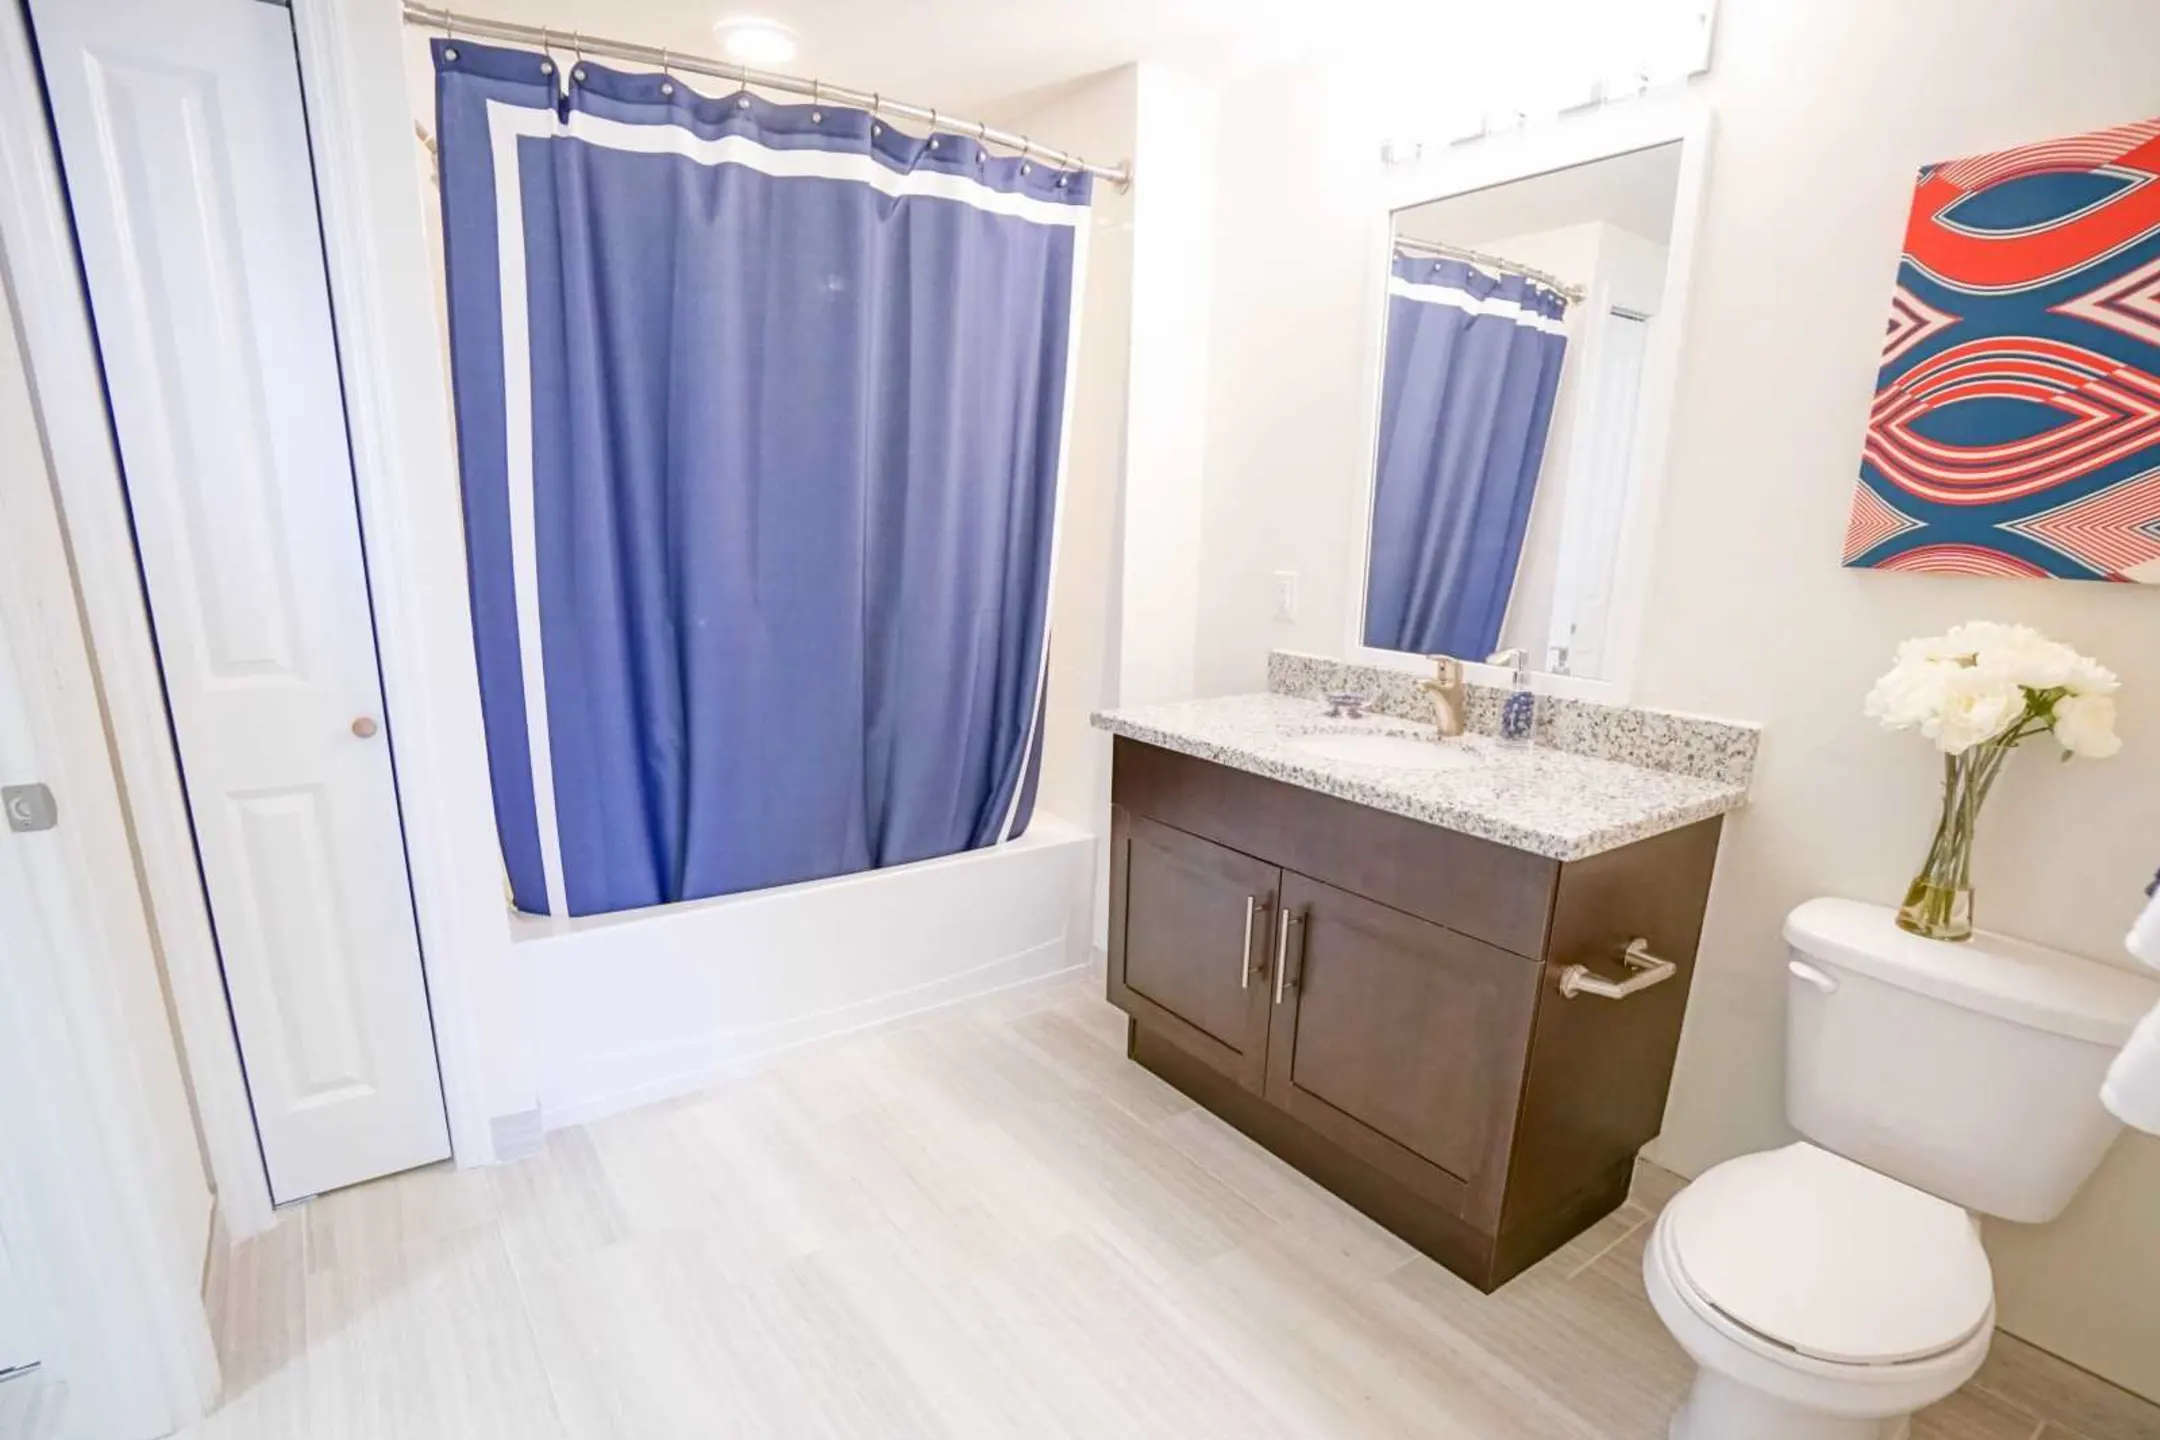 Bathroom - Metropolitan - Wilton Manors, FL